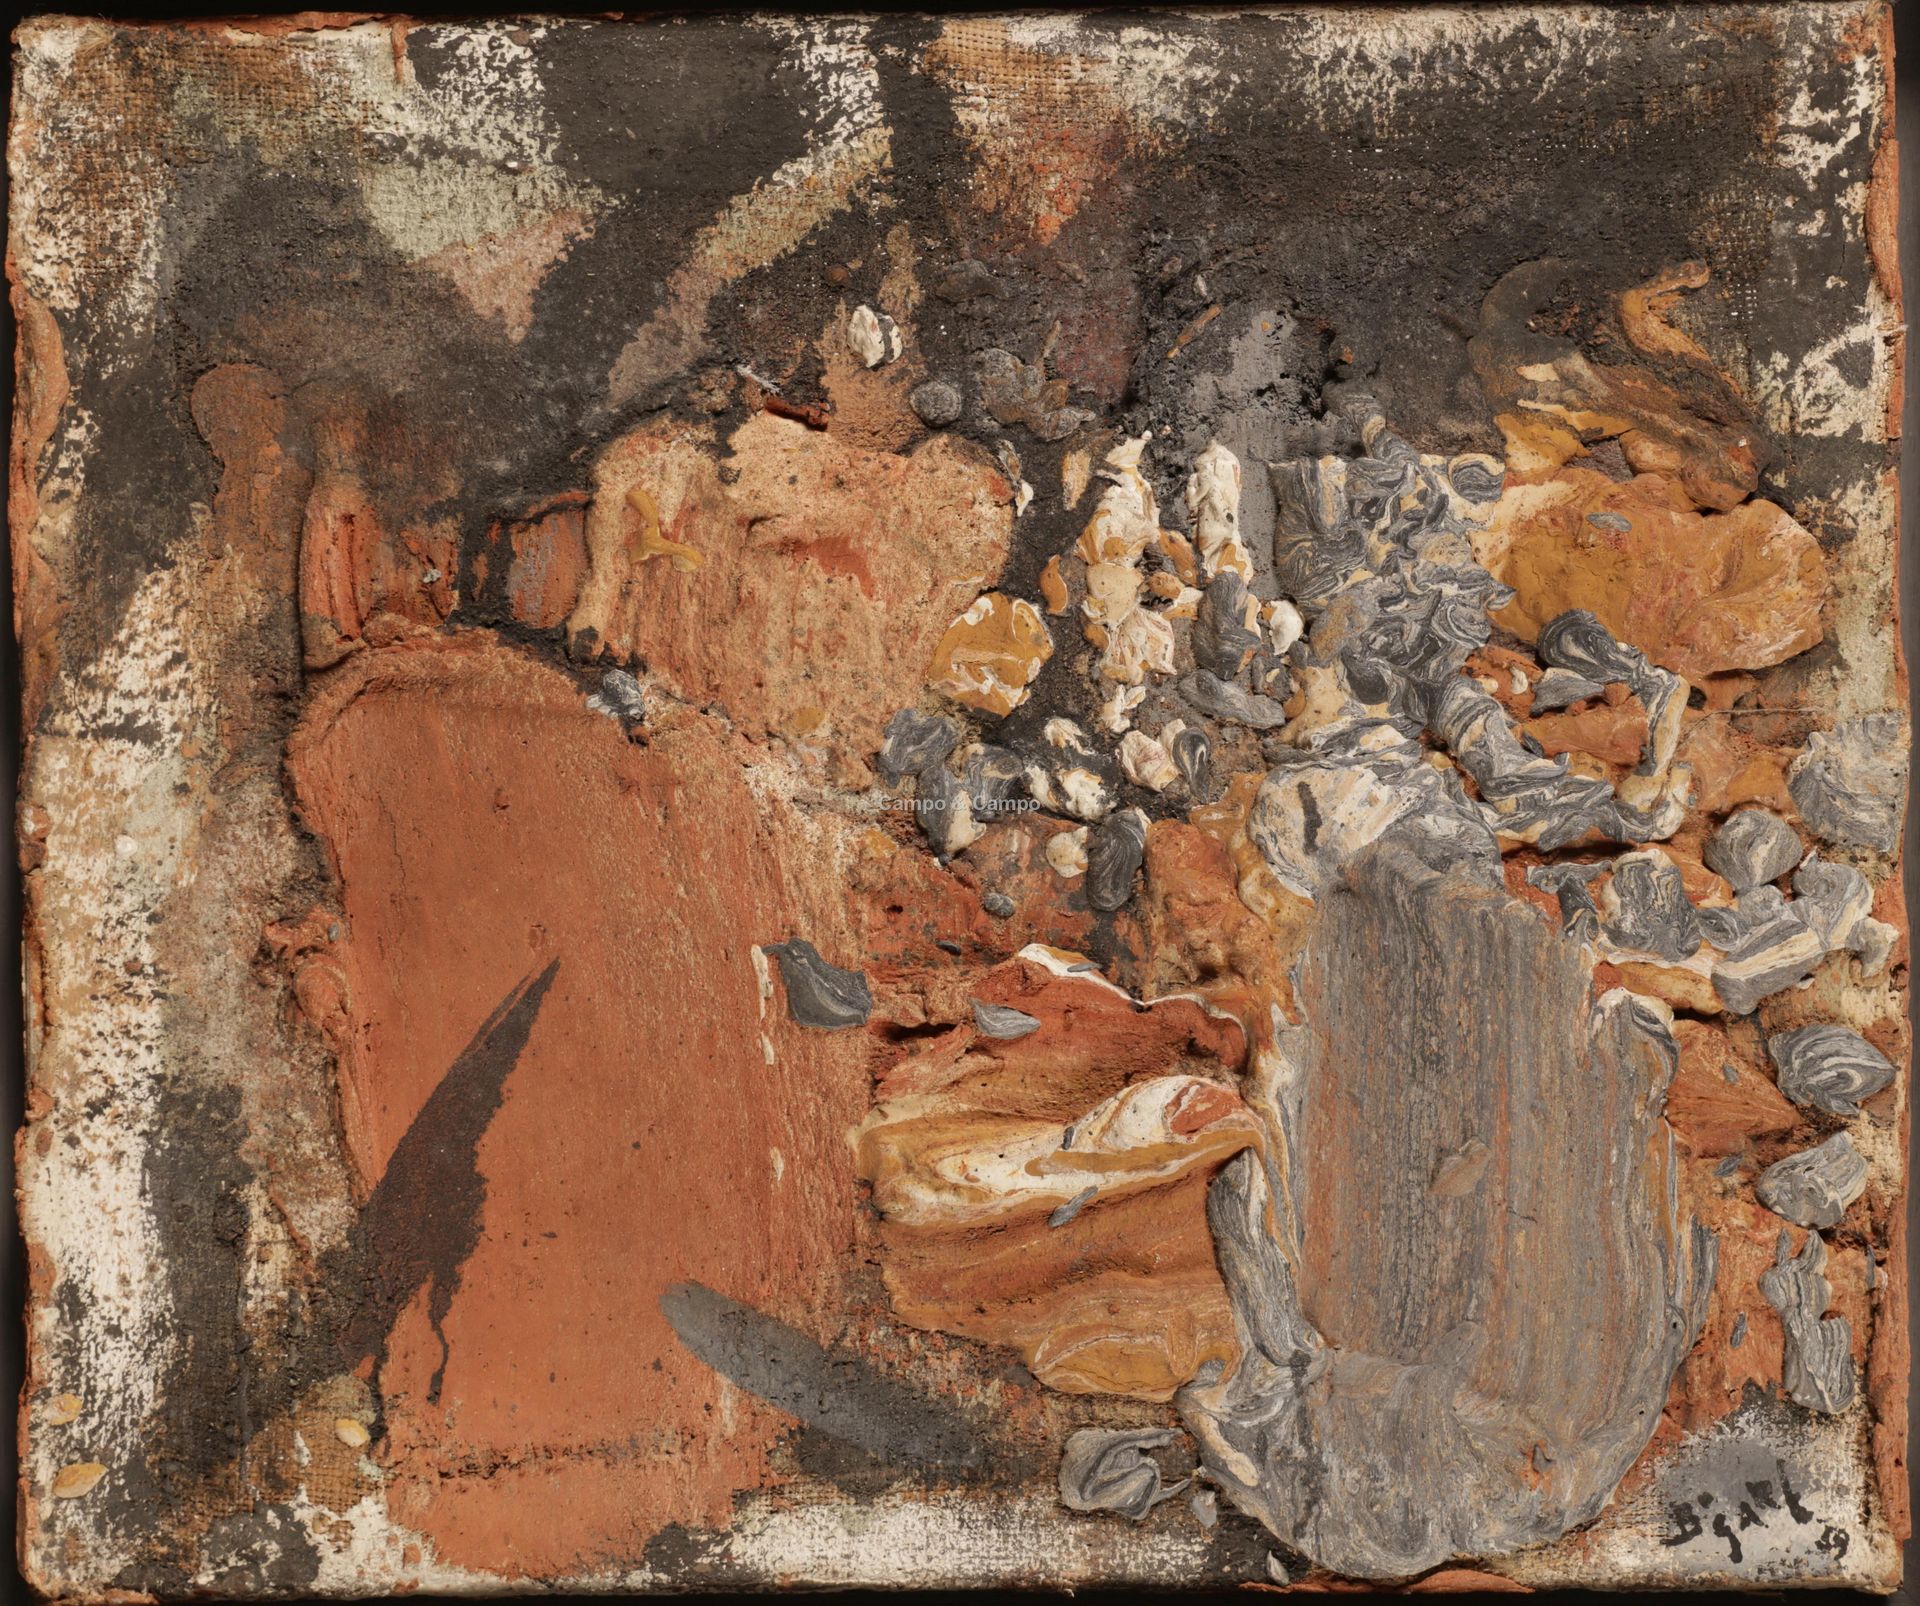 BOGART Bram 1921-2012 'Extase'
Materieschilderij op doek. Tableau de matière sur&hellip;